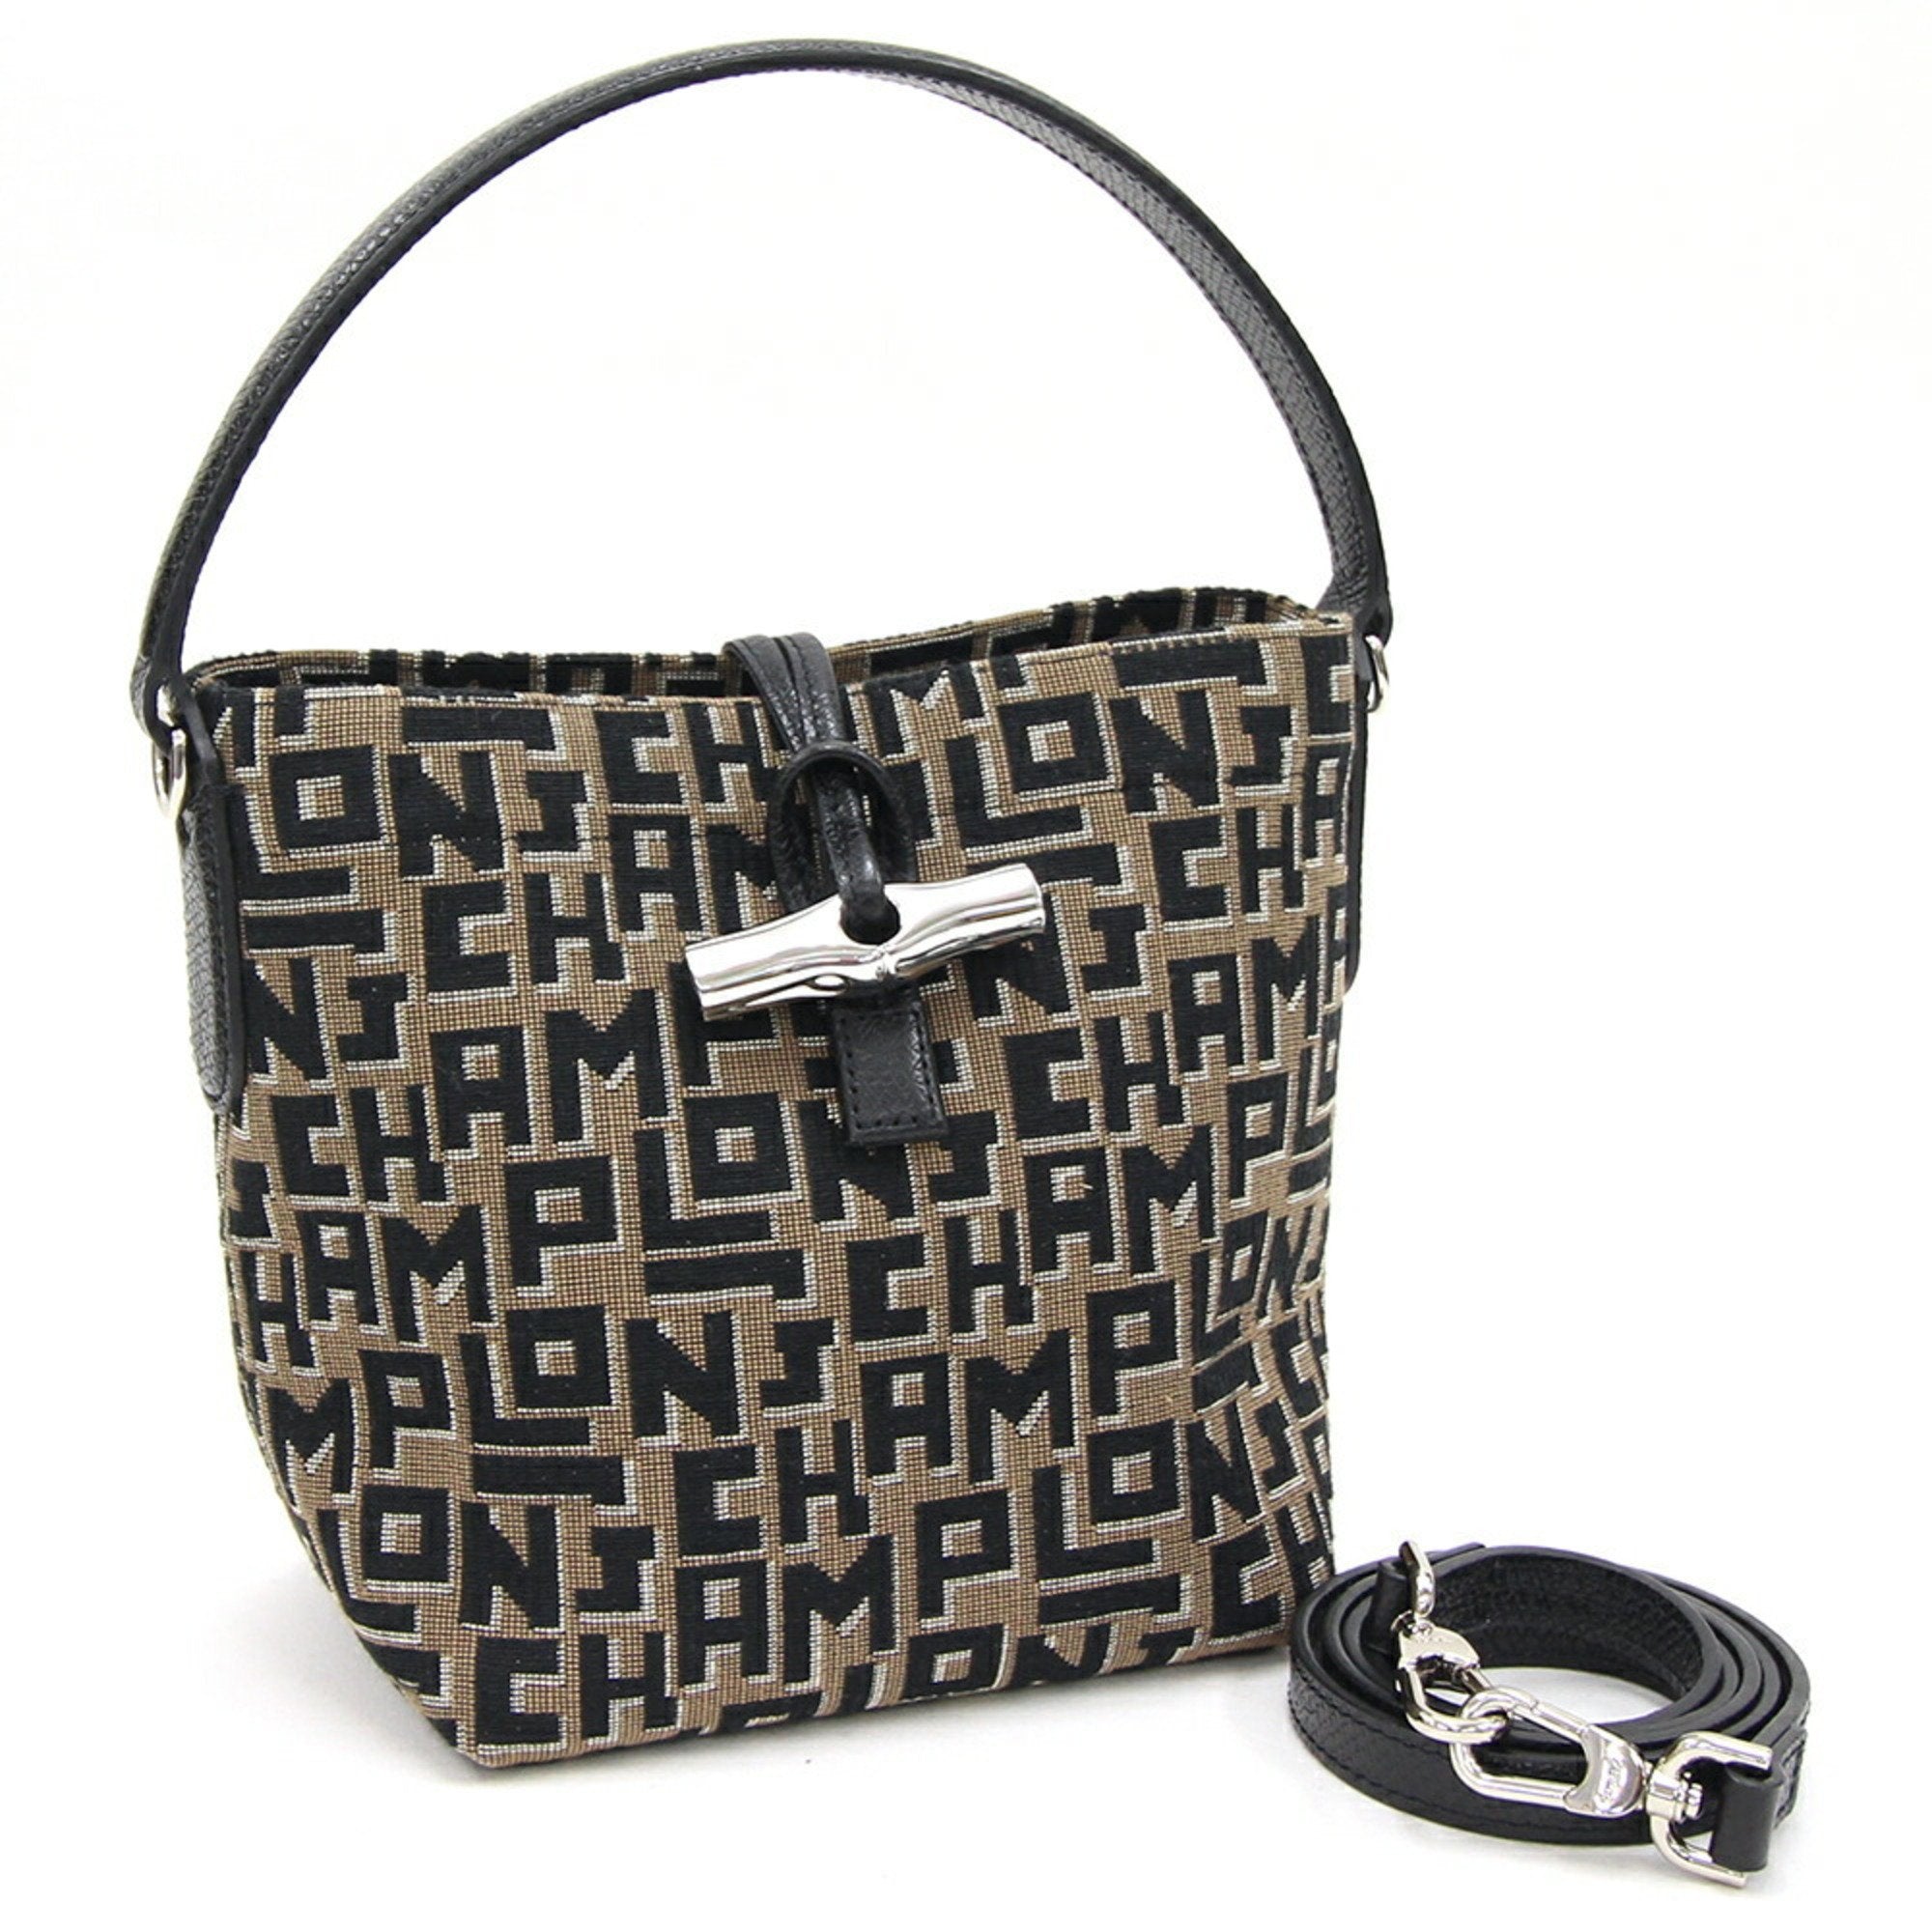 Handbag Rozo Essential Bucket Bag S Brown Black Canvas Leather Shoulder Women's